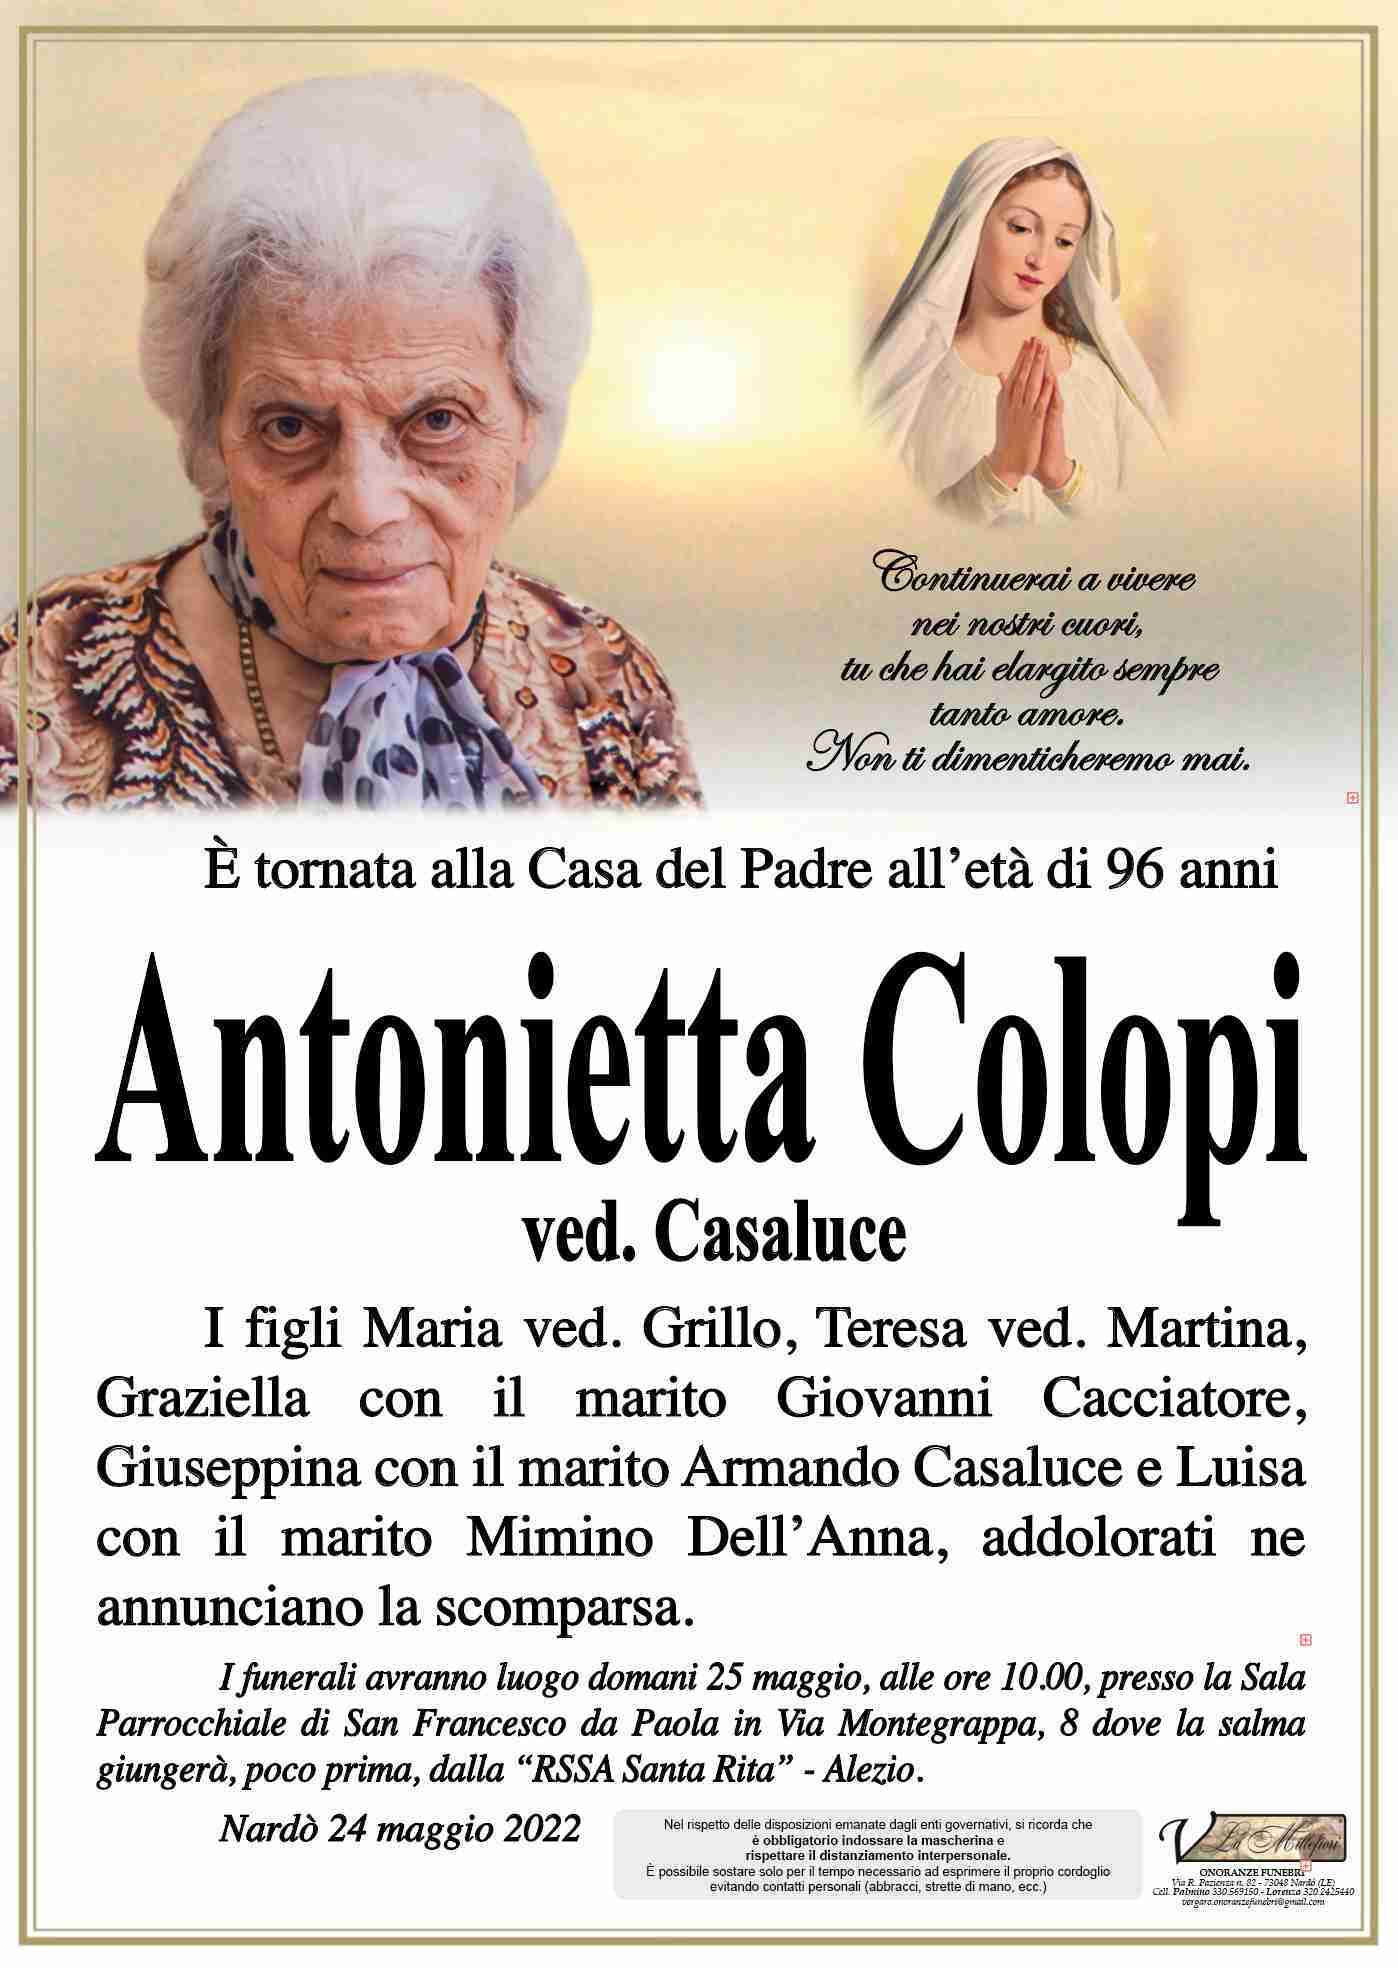 Antonietta Colopi